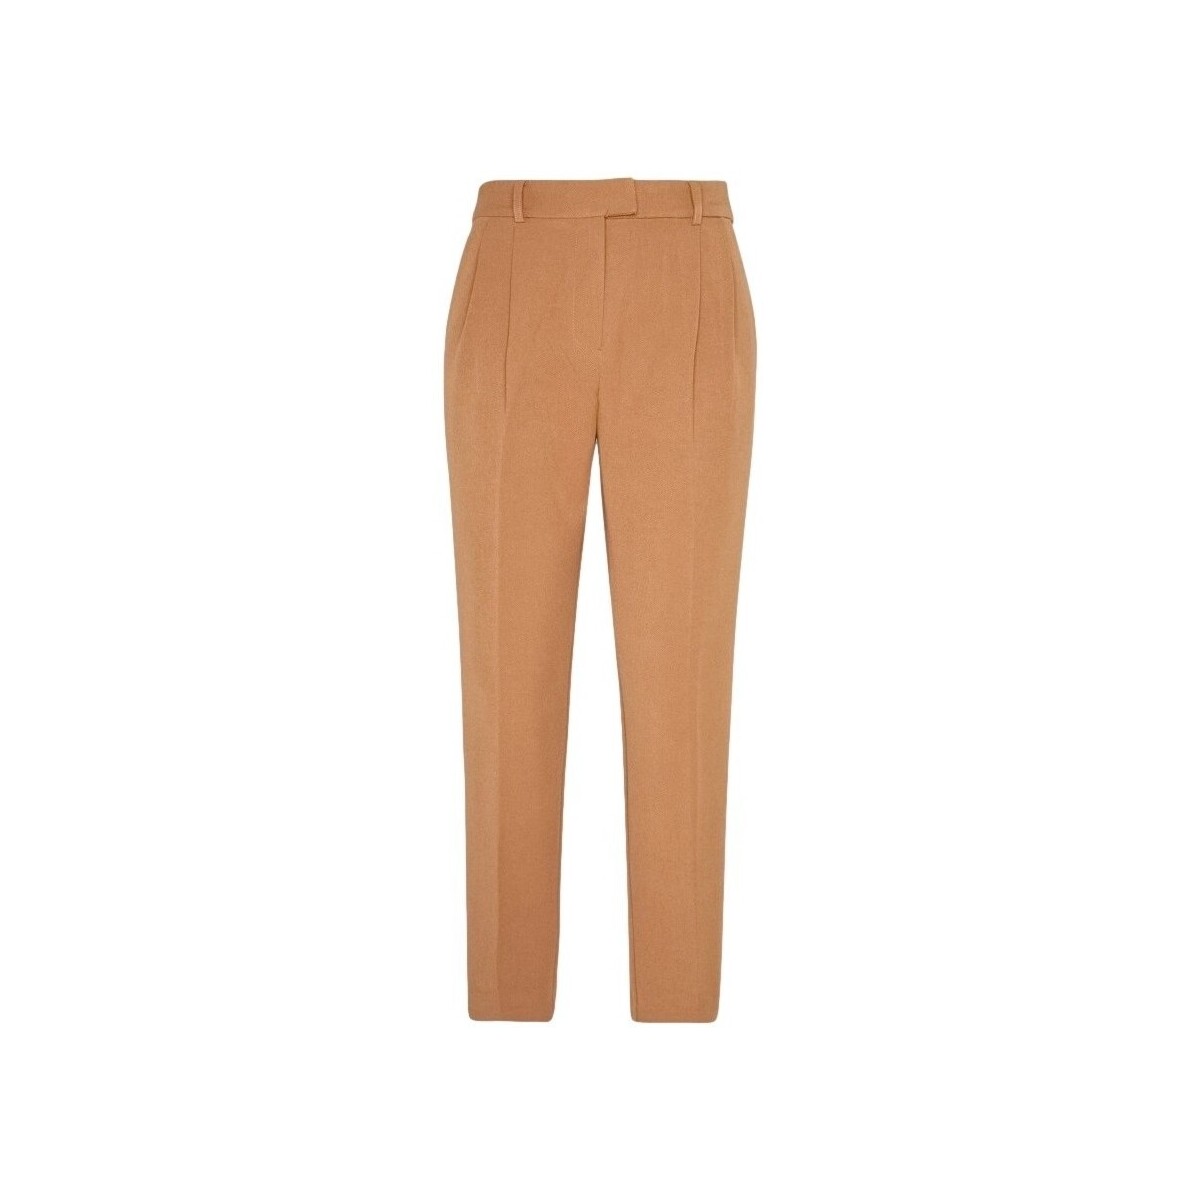 Textiel Dames Broeken / Pantalons Only Lenia Vika Pants - Toasted Coconut Bruin